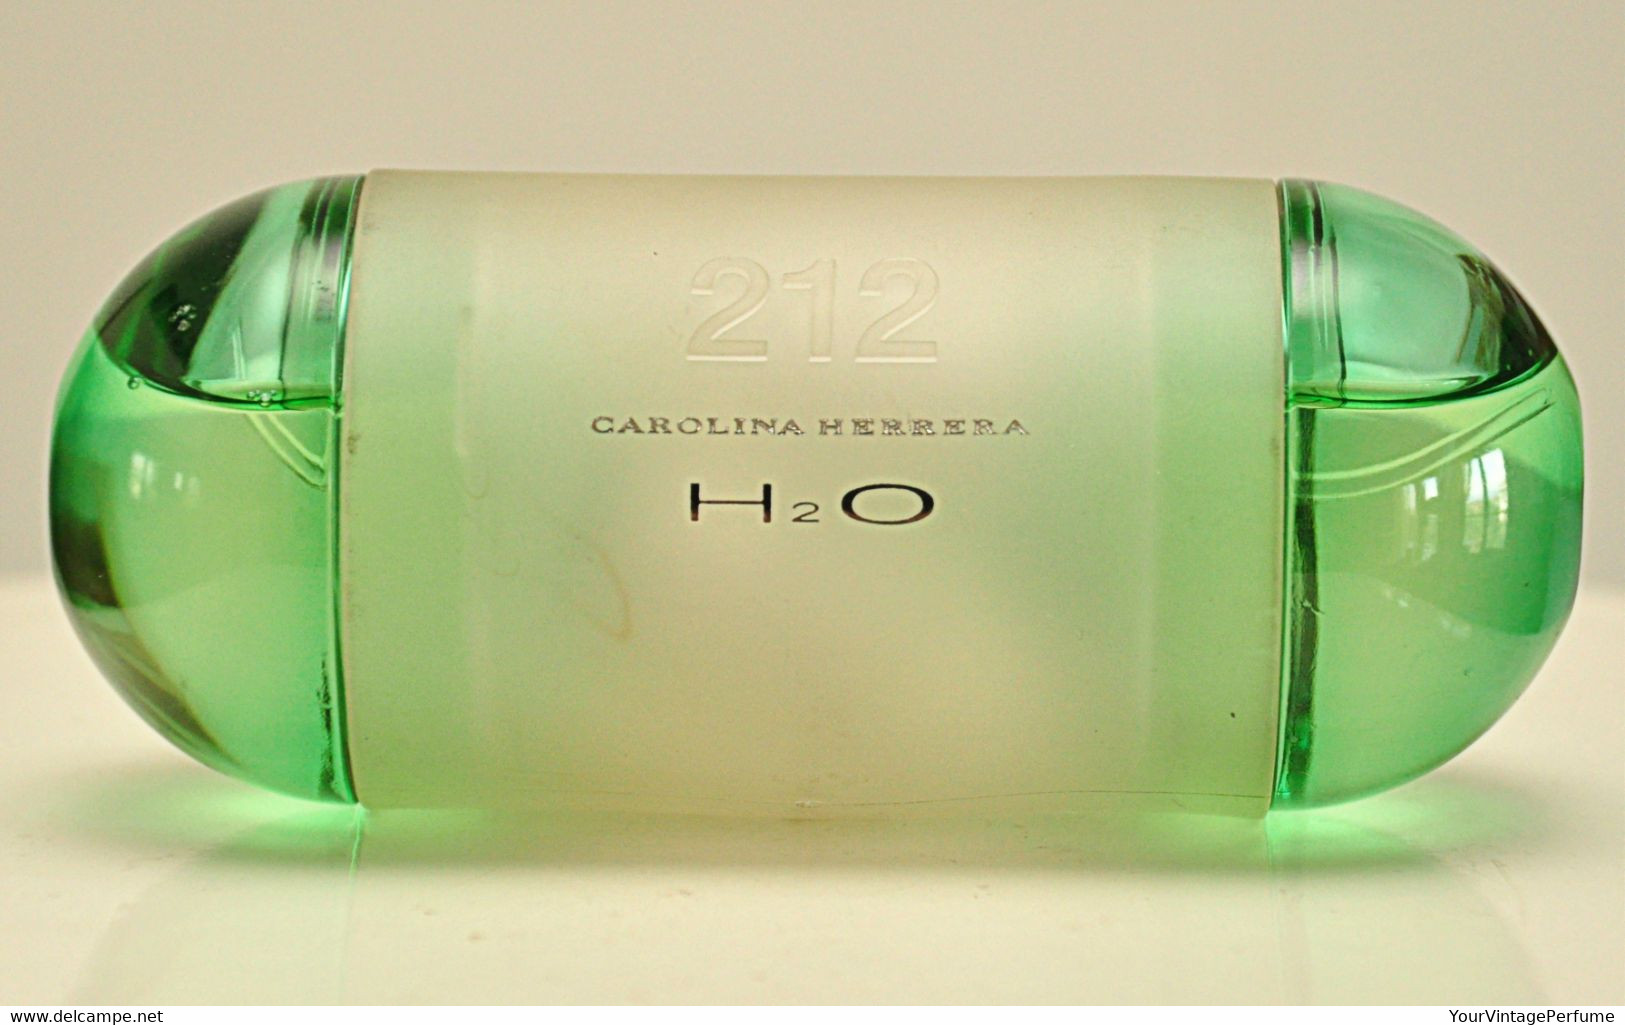 Carolina Herrera 212 H2O Eau De Toilette Edt 60ml 2 Fl. Oz. Spray Perfume For Woman Rare Vintage 2003 - Men